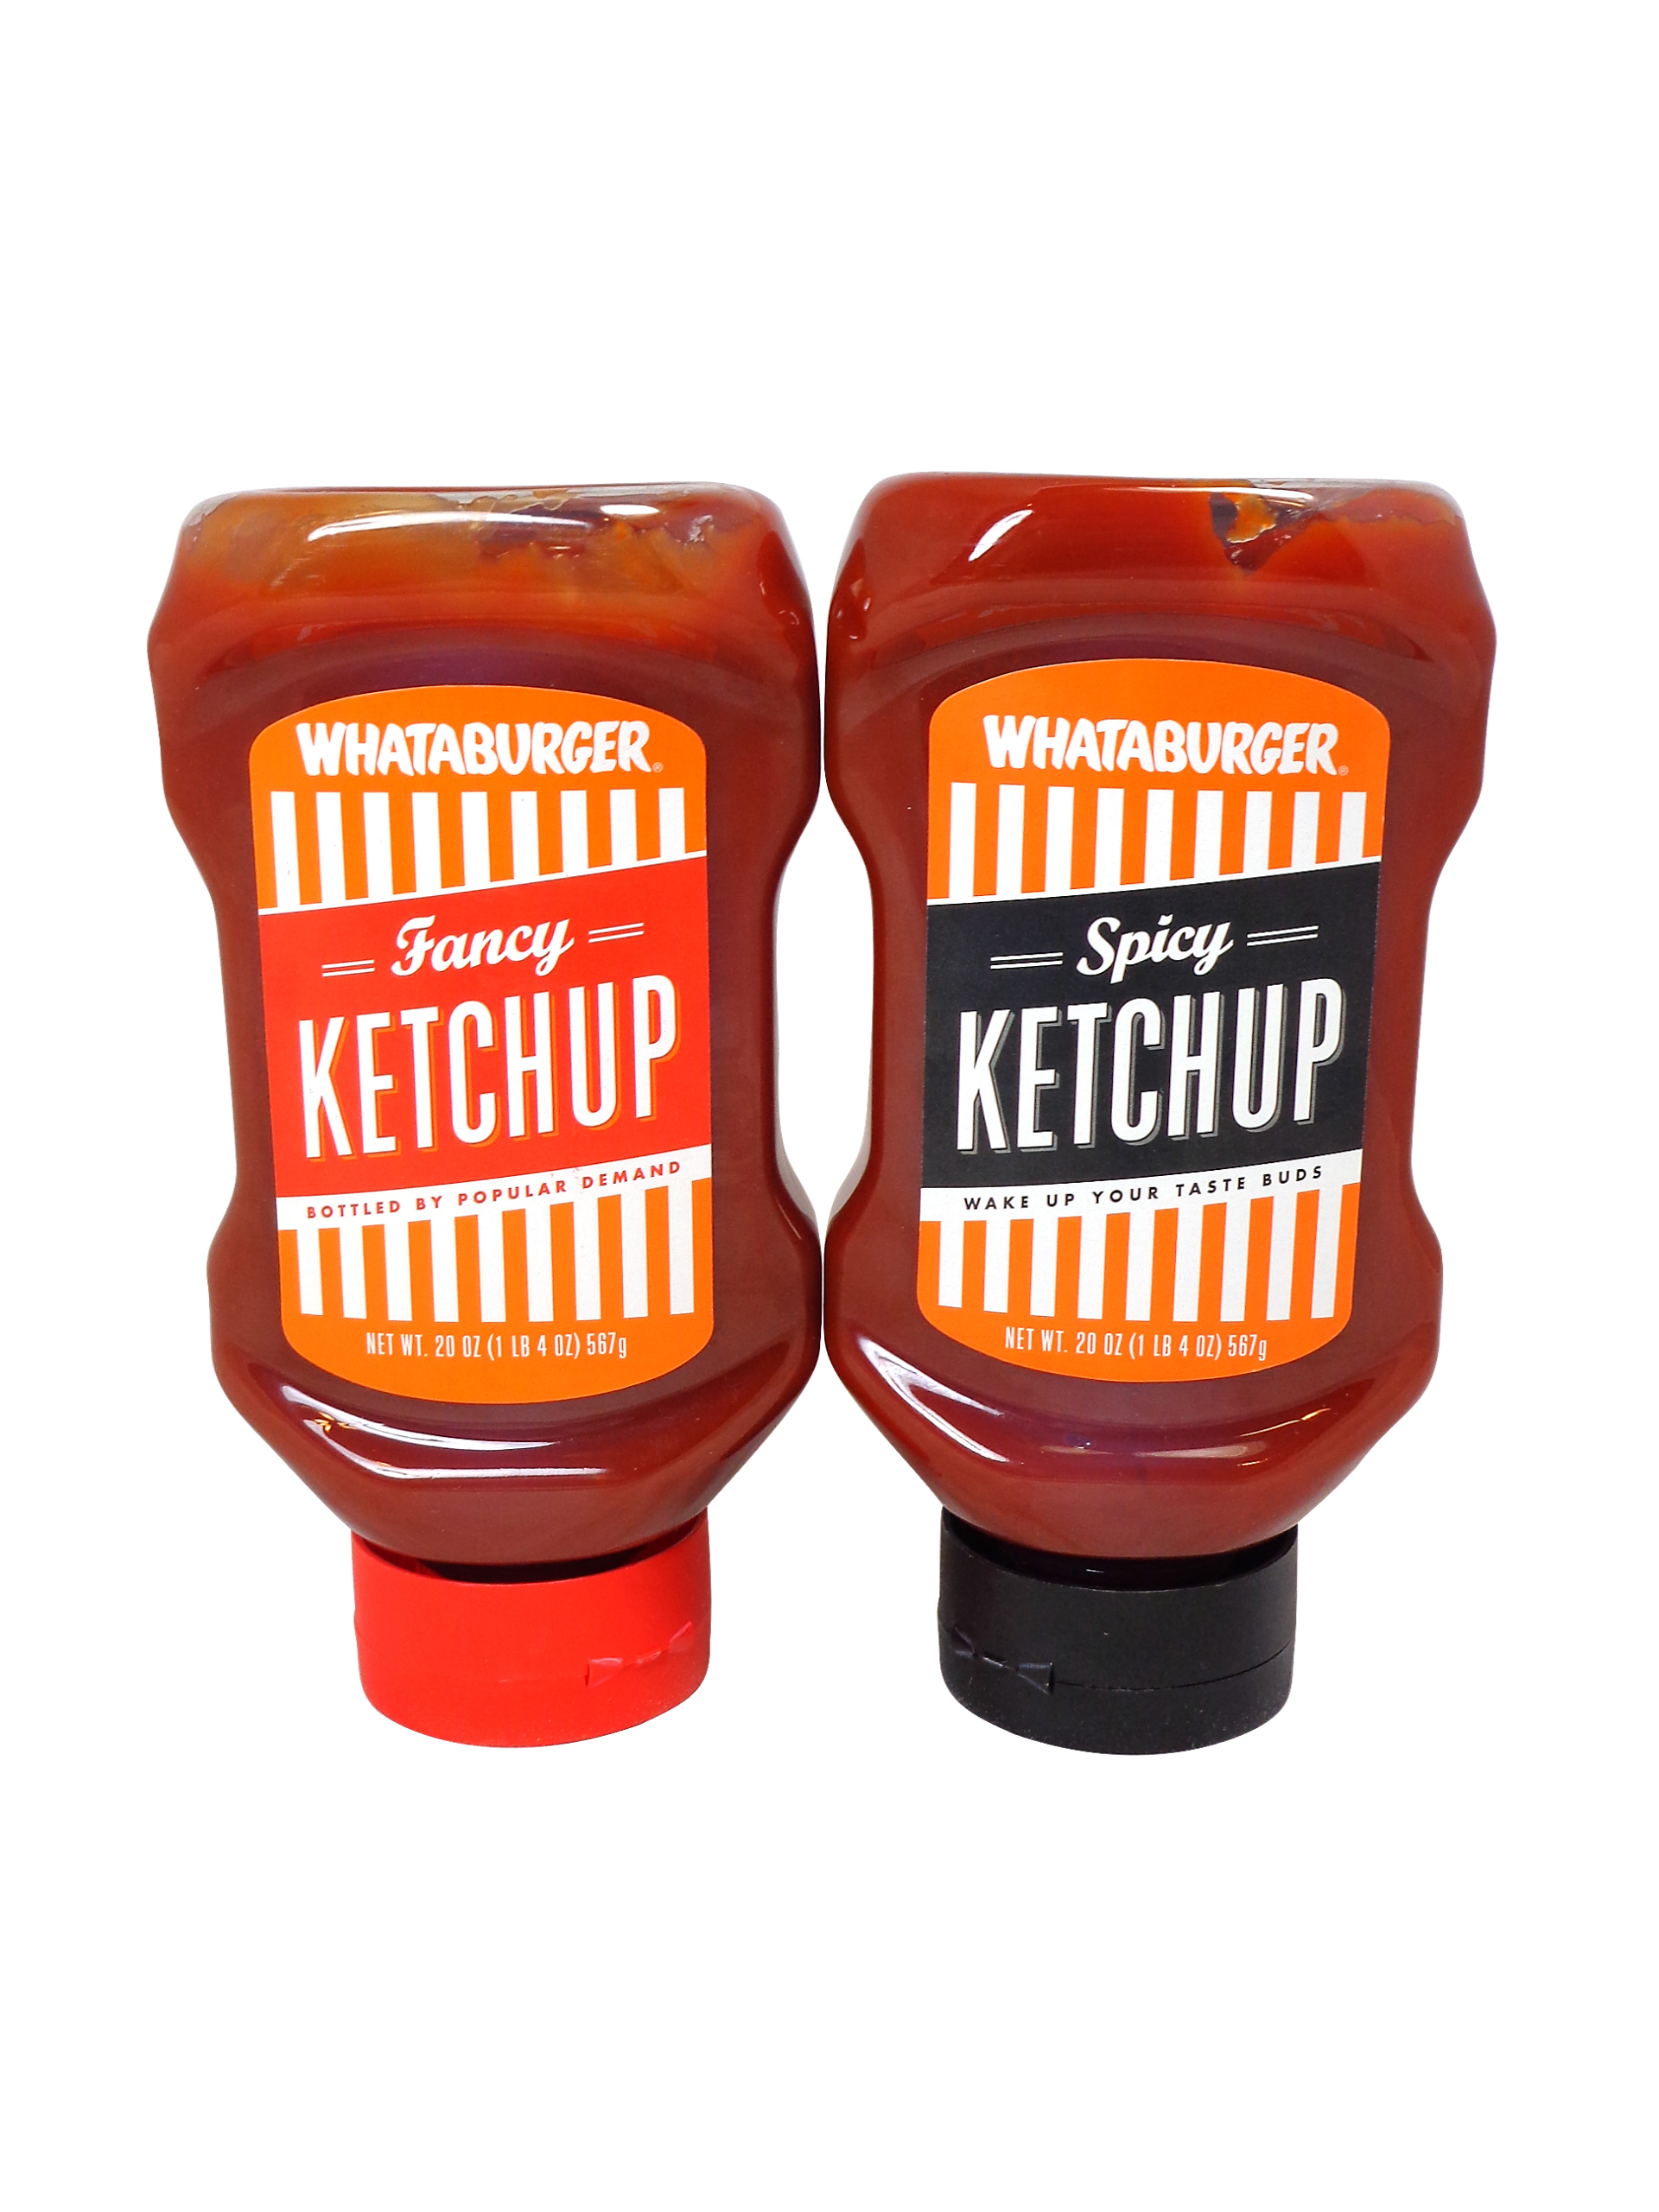 https://soda-emporium.com/wp-content/uploads/2019/04/Whataburger-Ketchup-Variety-Pack-scaled.jpg